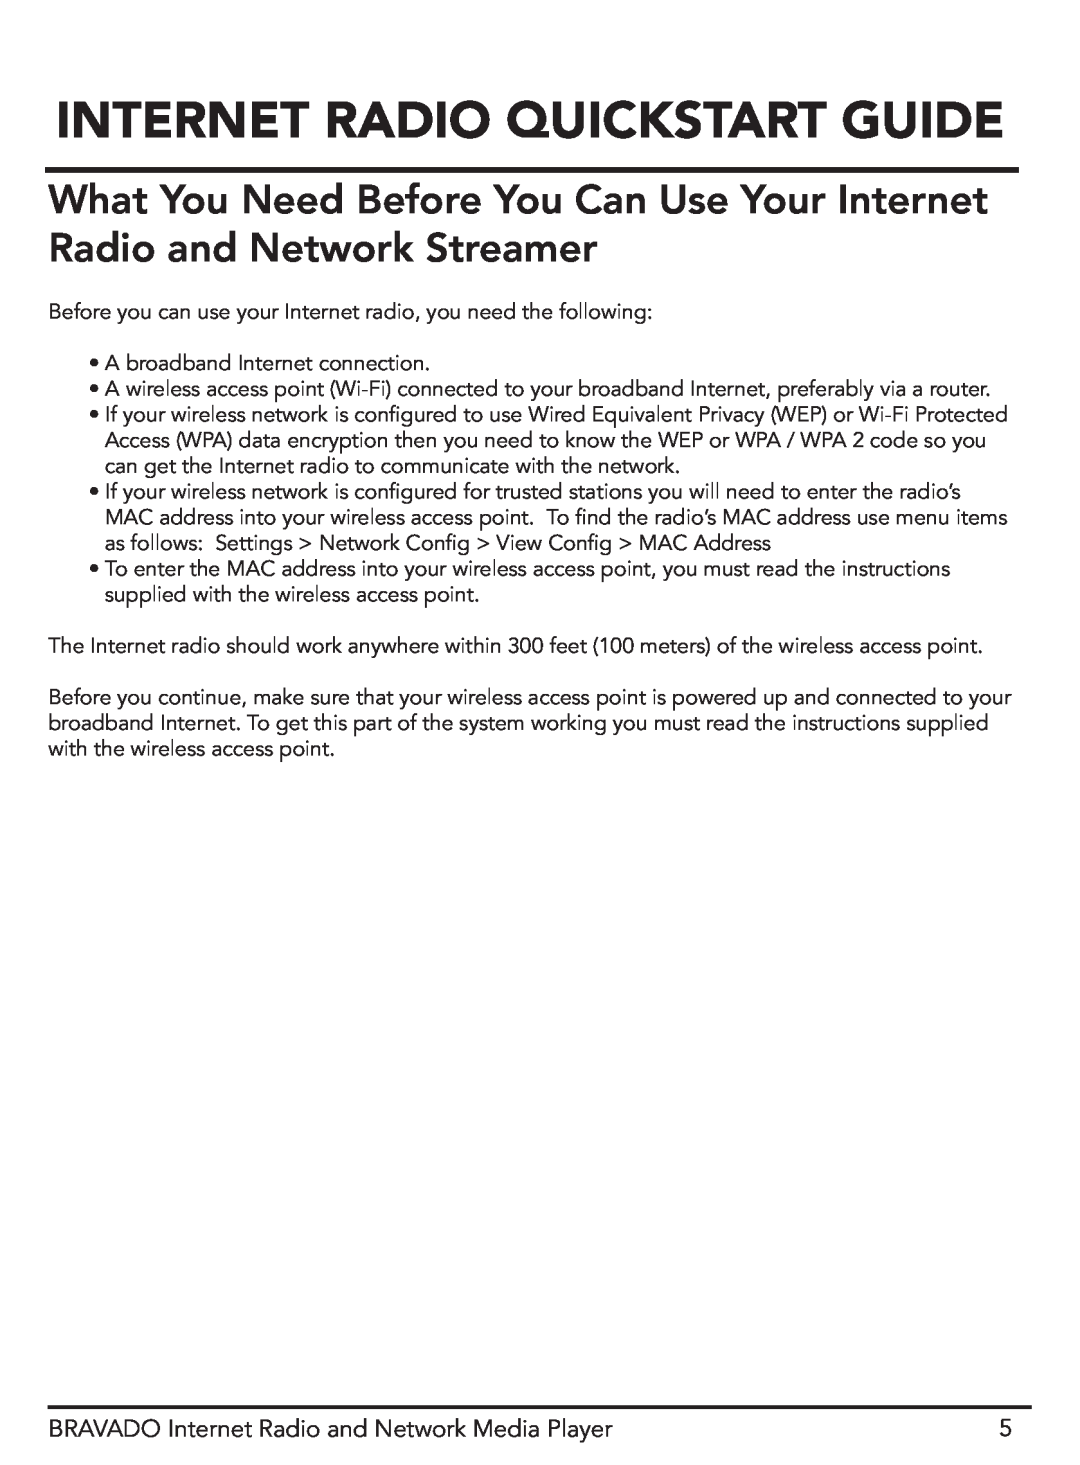 Grace GDI-IRD4400M manual Internet Radio Quickstart Guide, BRAVADO Internet Radio and Network Media Player 